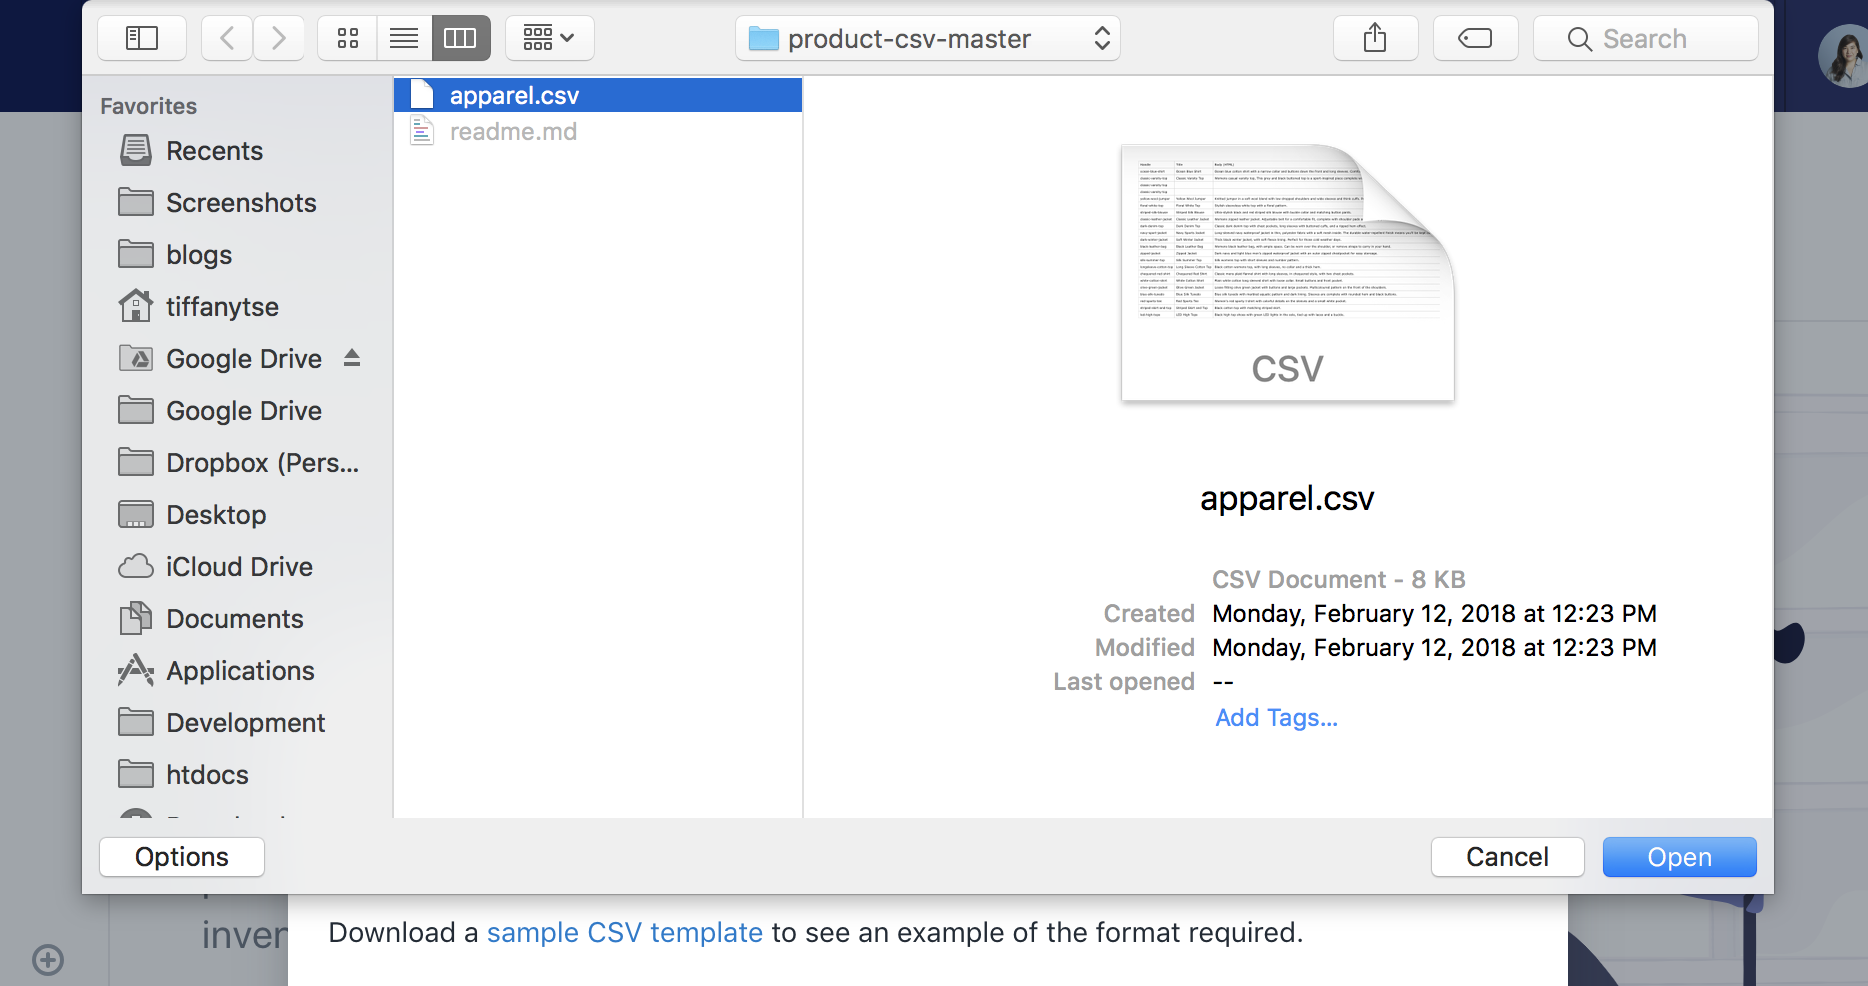 shopify upload product csv - choose file modal